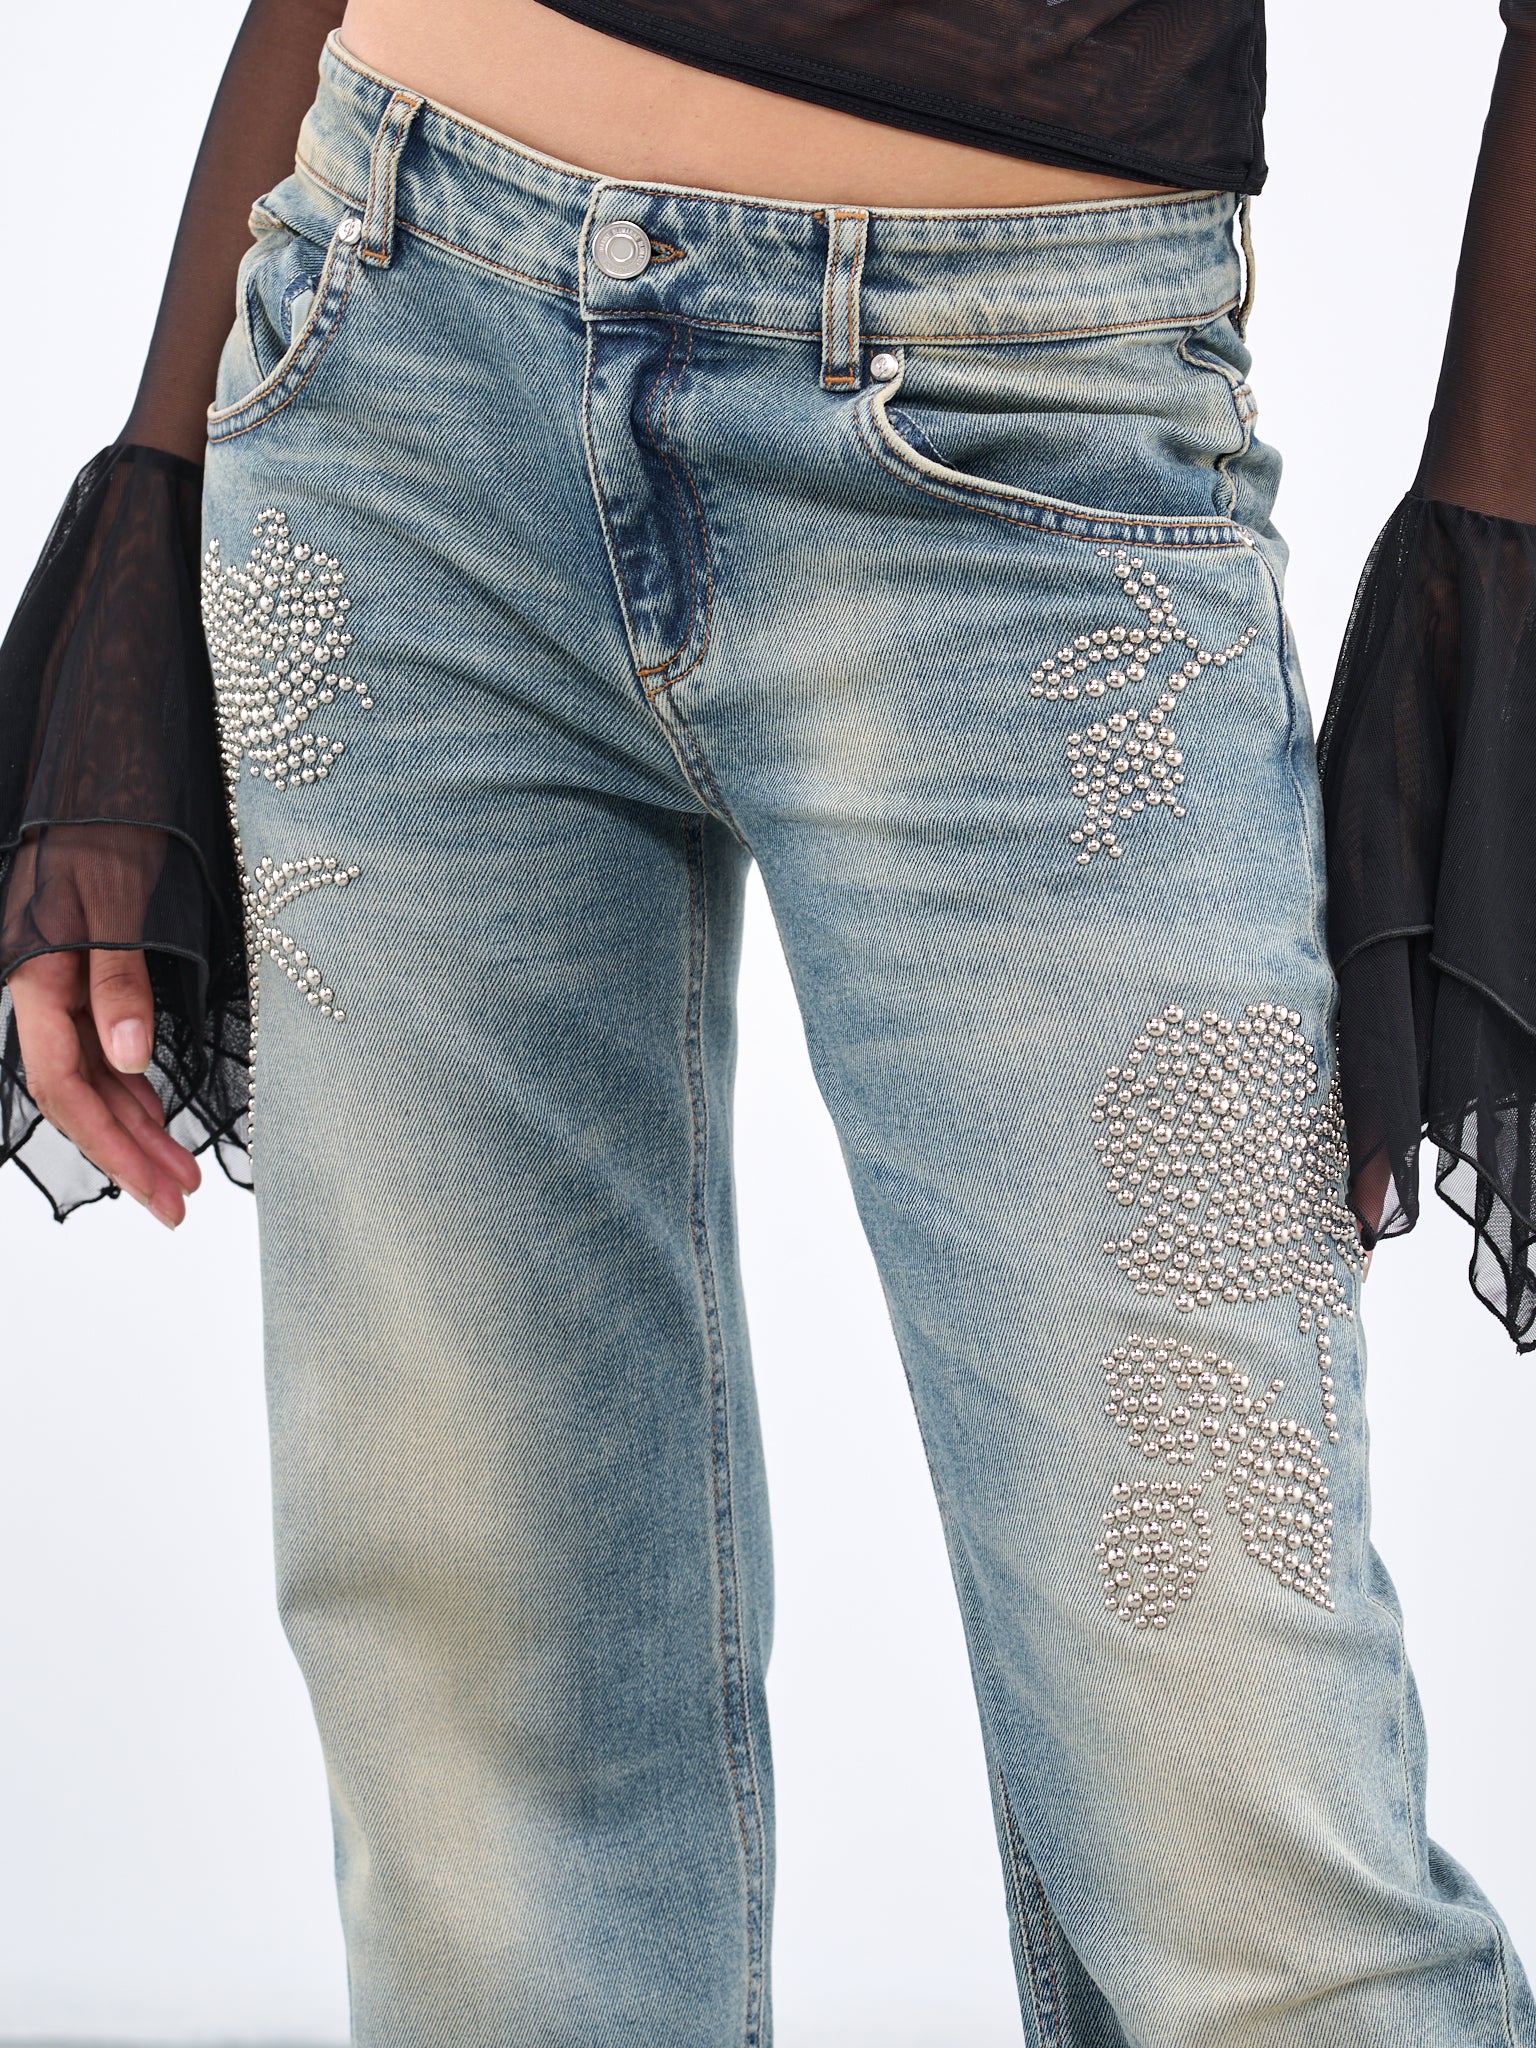 BLUMARINE Stud Flower Jeans | H.Lorenzo - detail 1